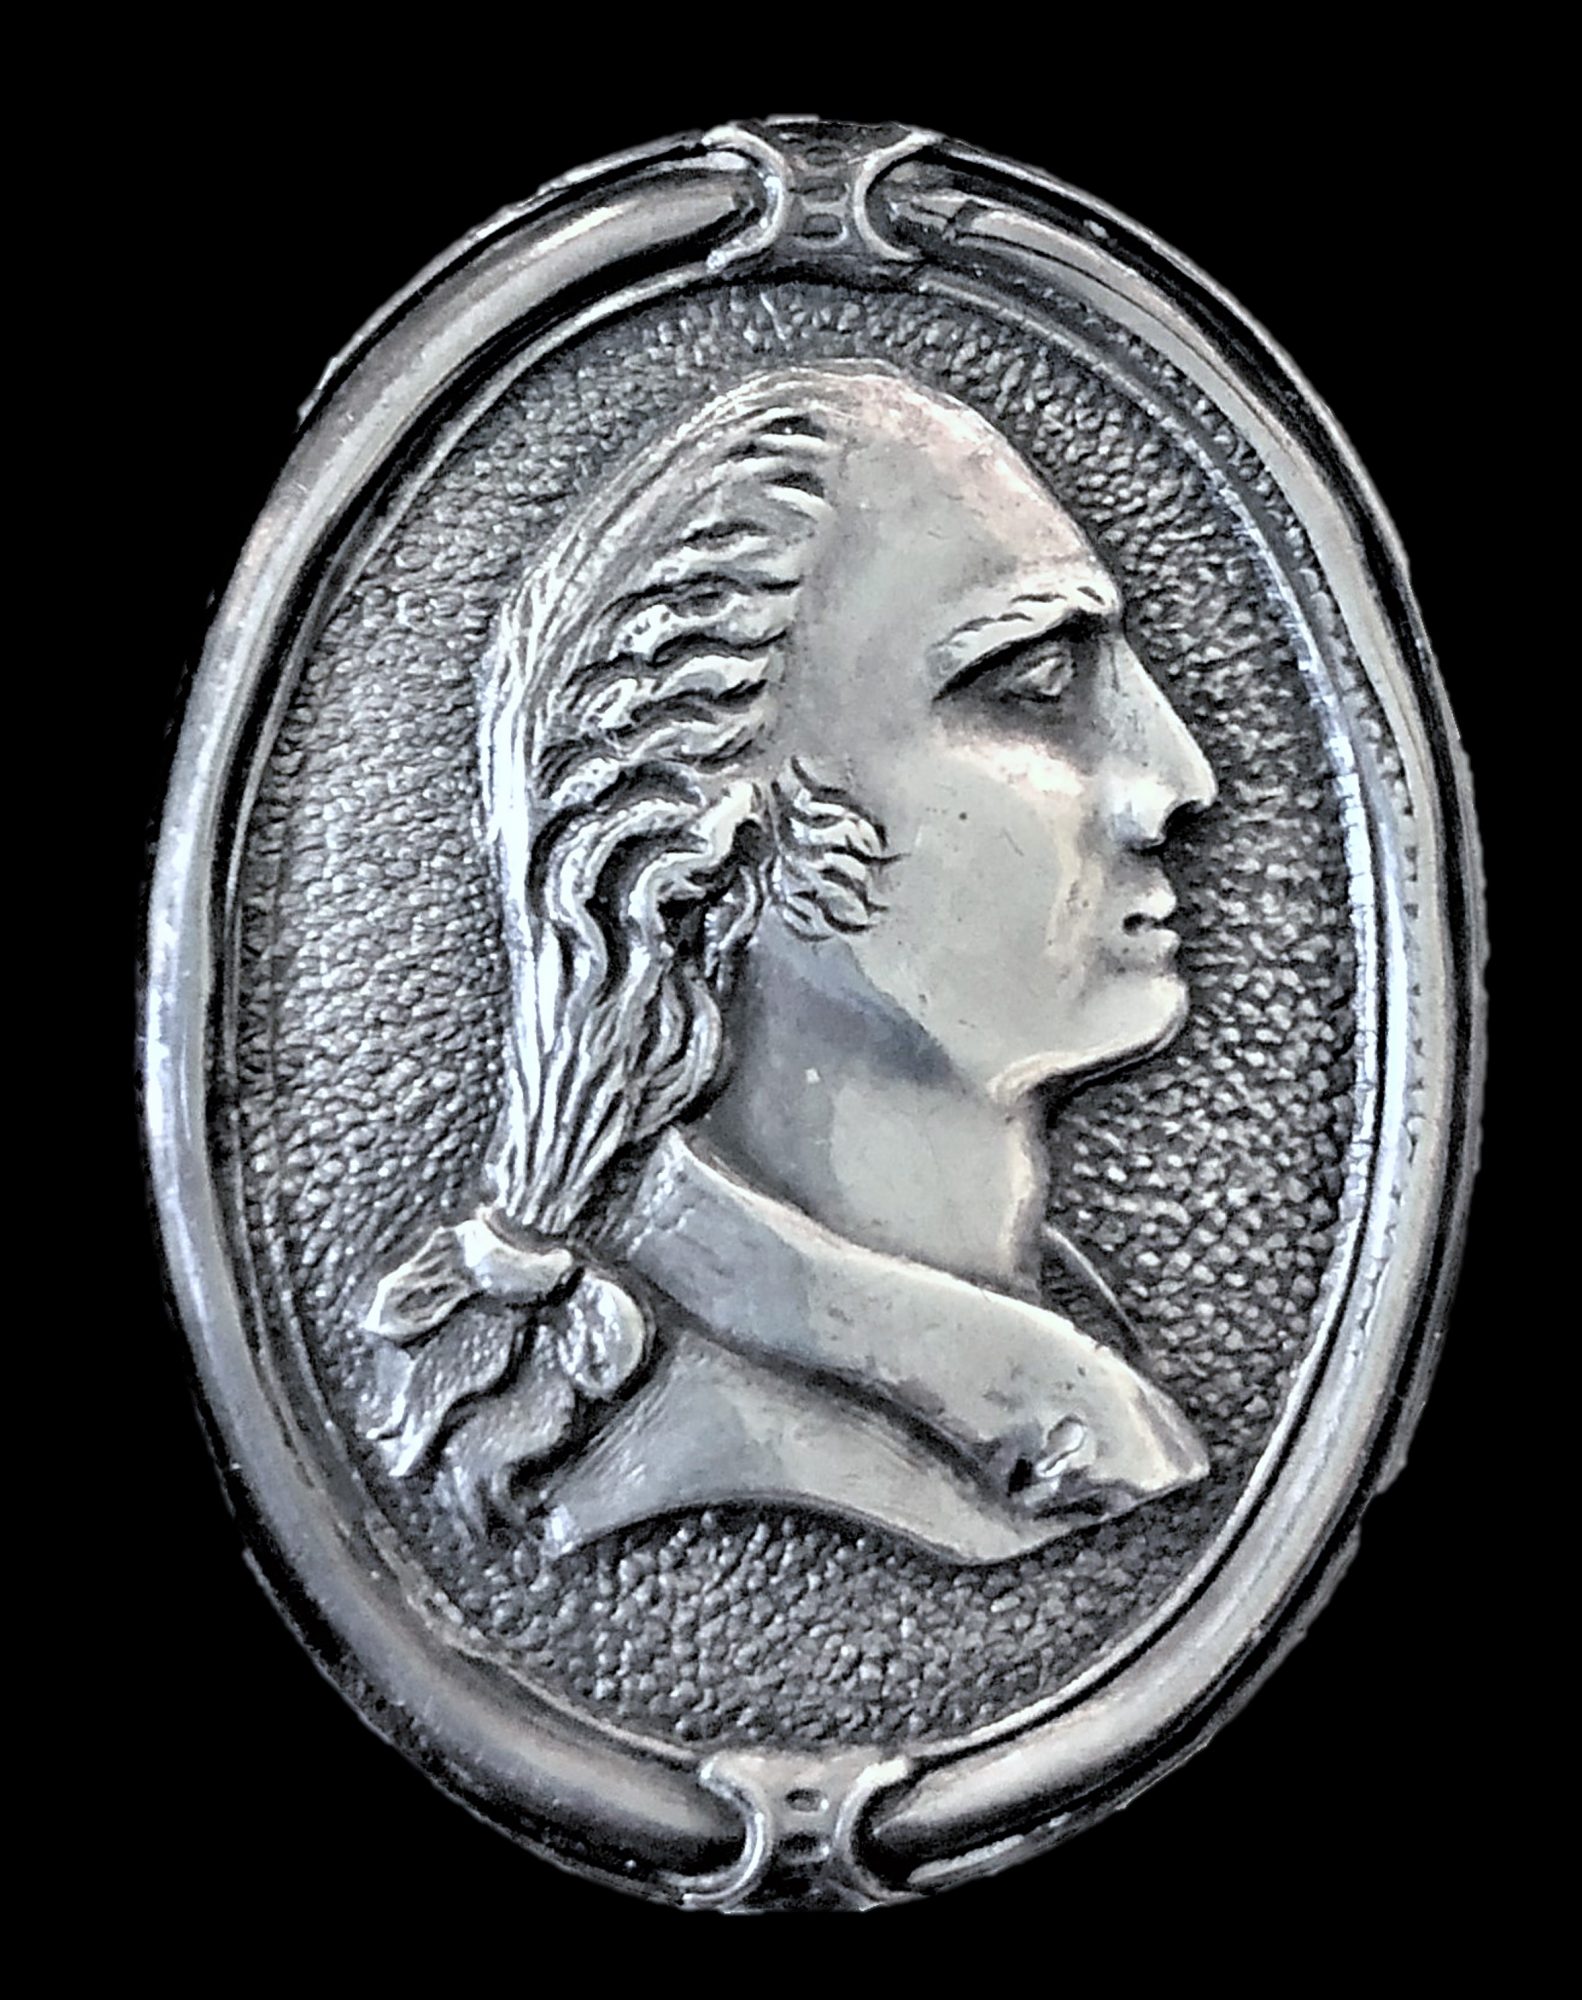 Rare oval george washington bust button